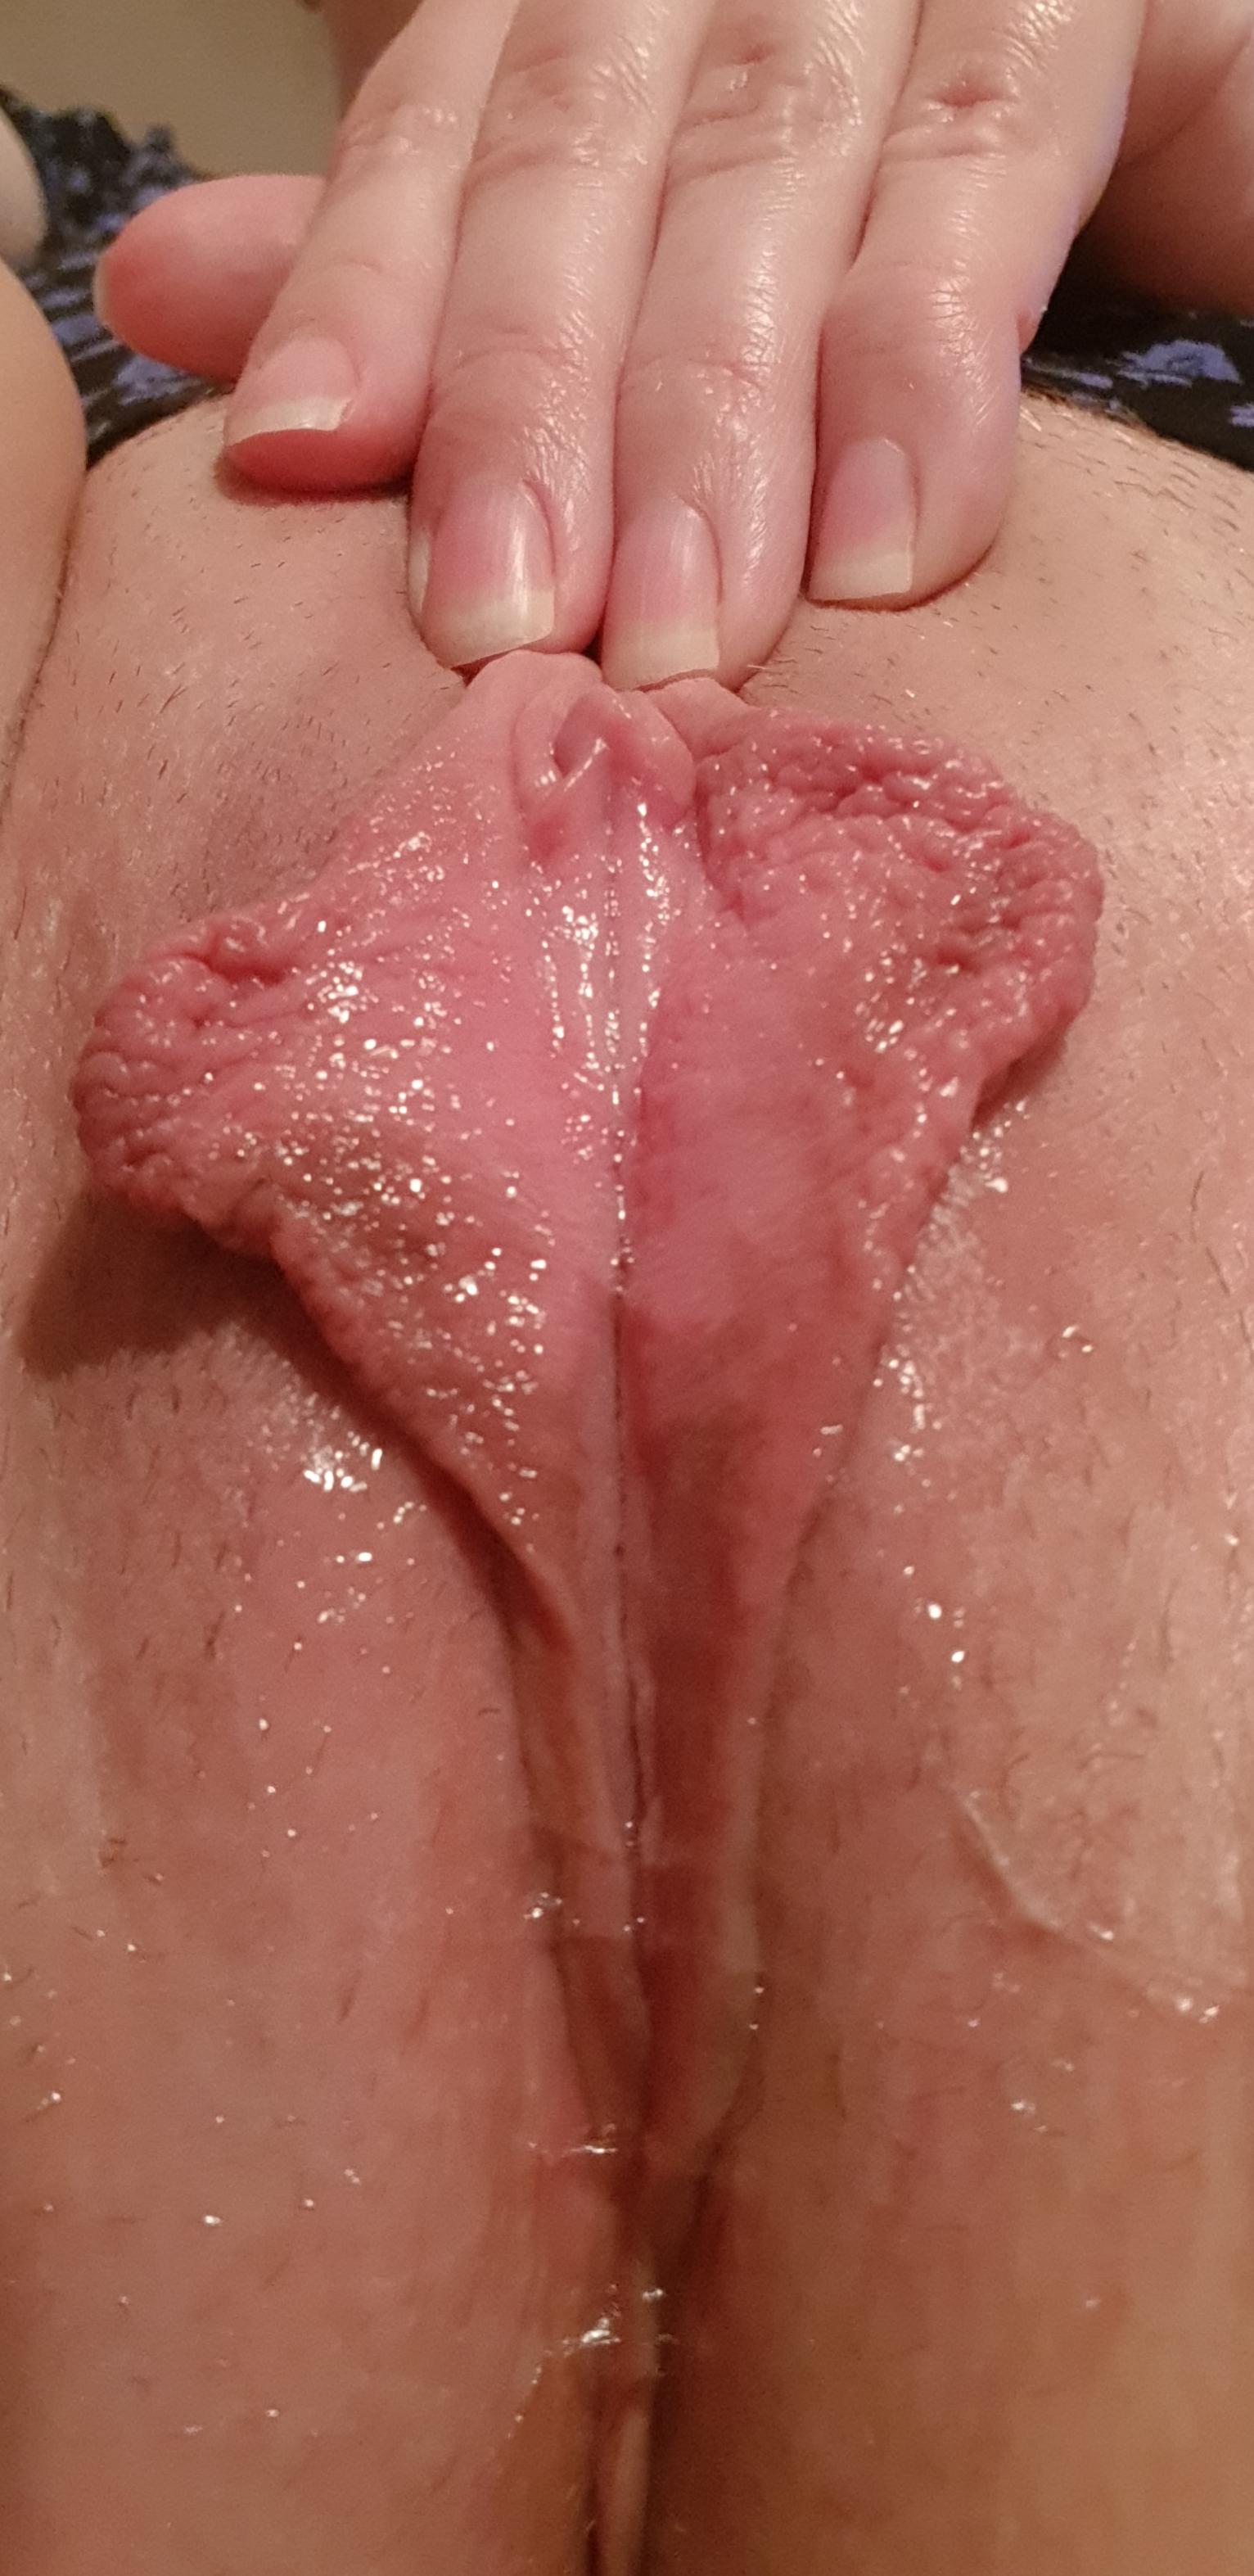 Do you like really wet pussy lips